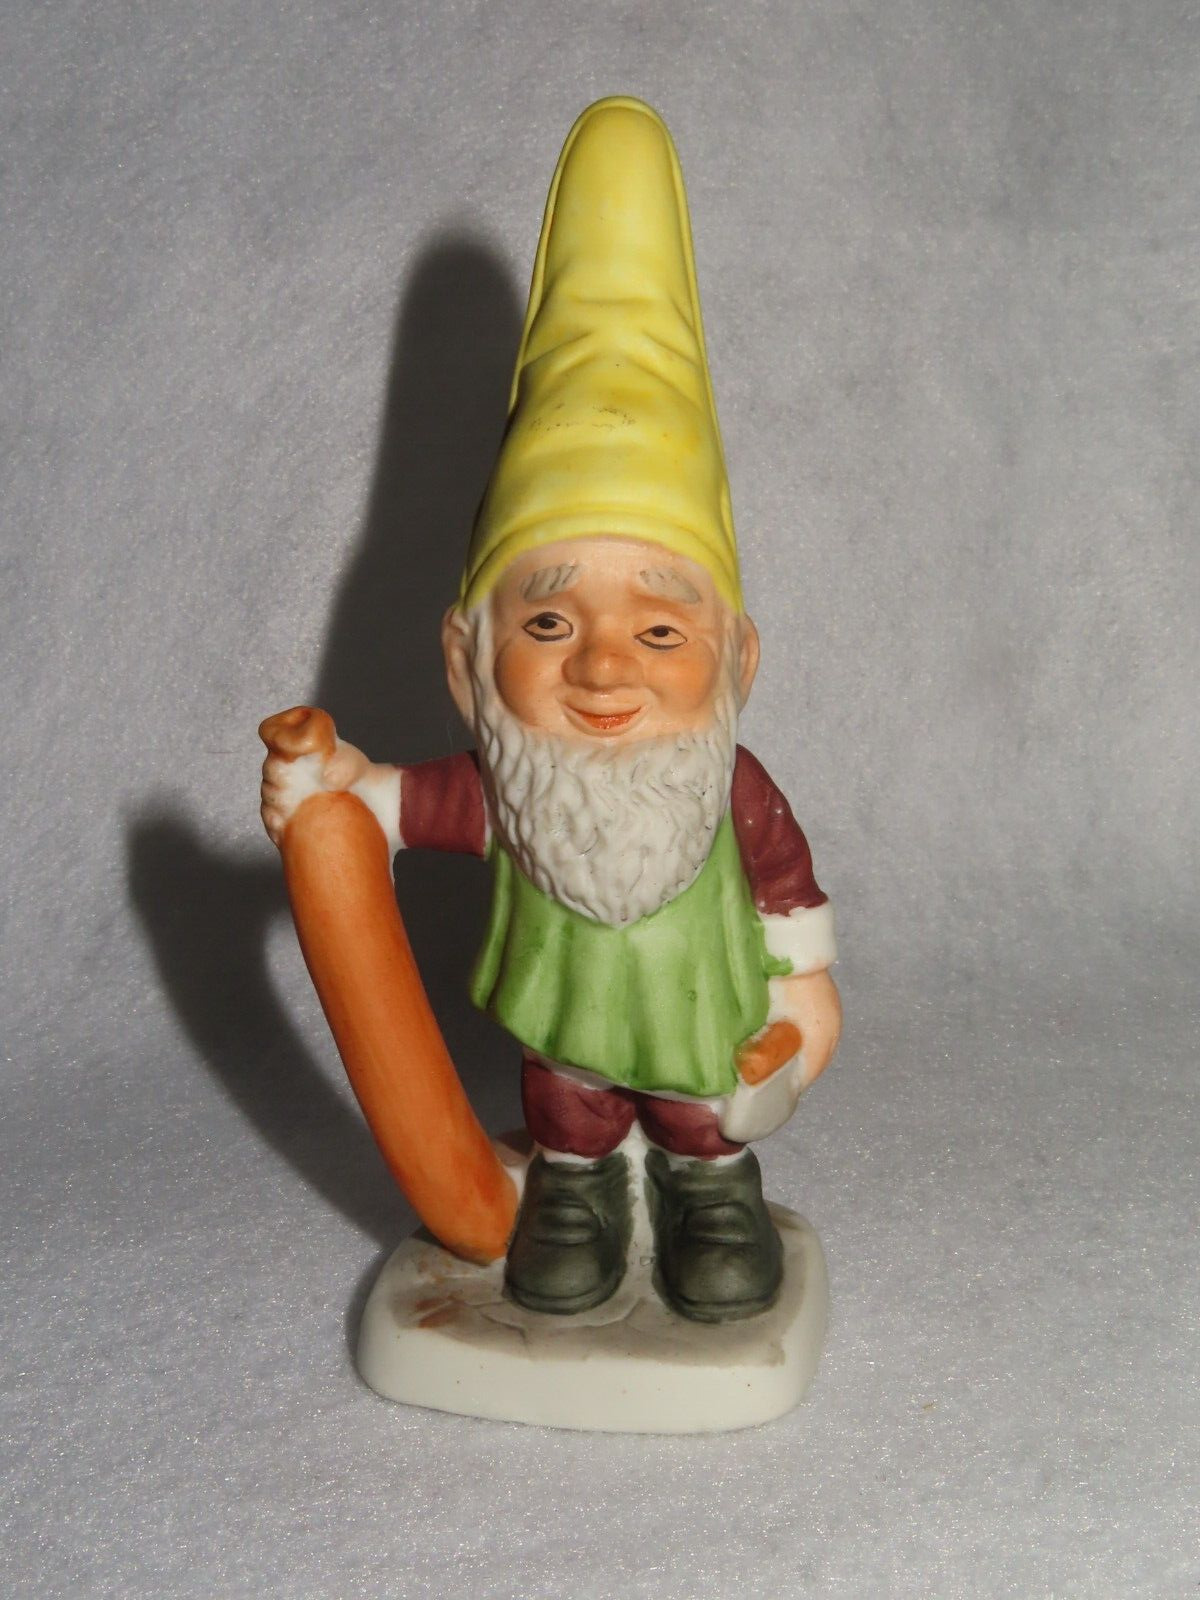 The Sausage Maker Brinns Gnome Figurine